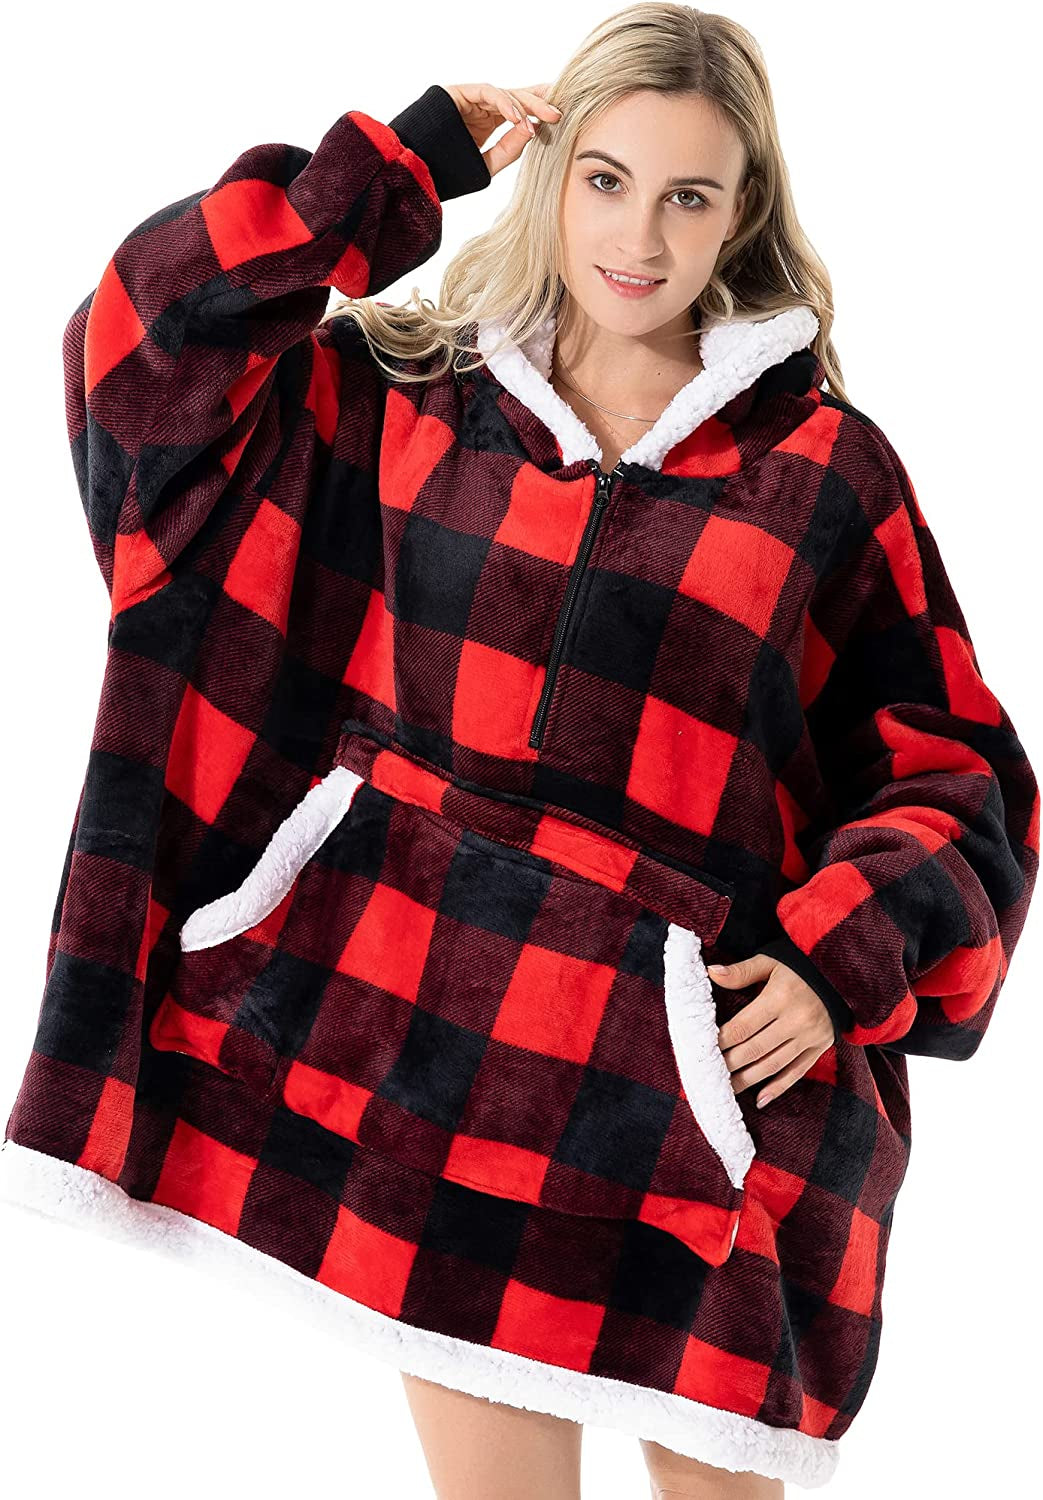 Wearable Hoodie Blanket Oversized Sweatshirt Blanket Sherpa Blanket Soft Warm Cozy Fleece Hoodie for Adults